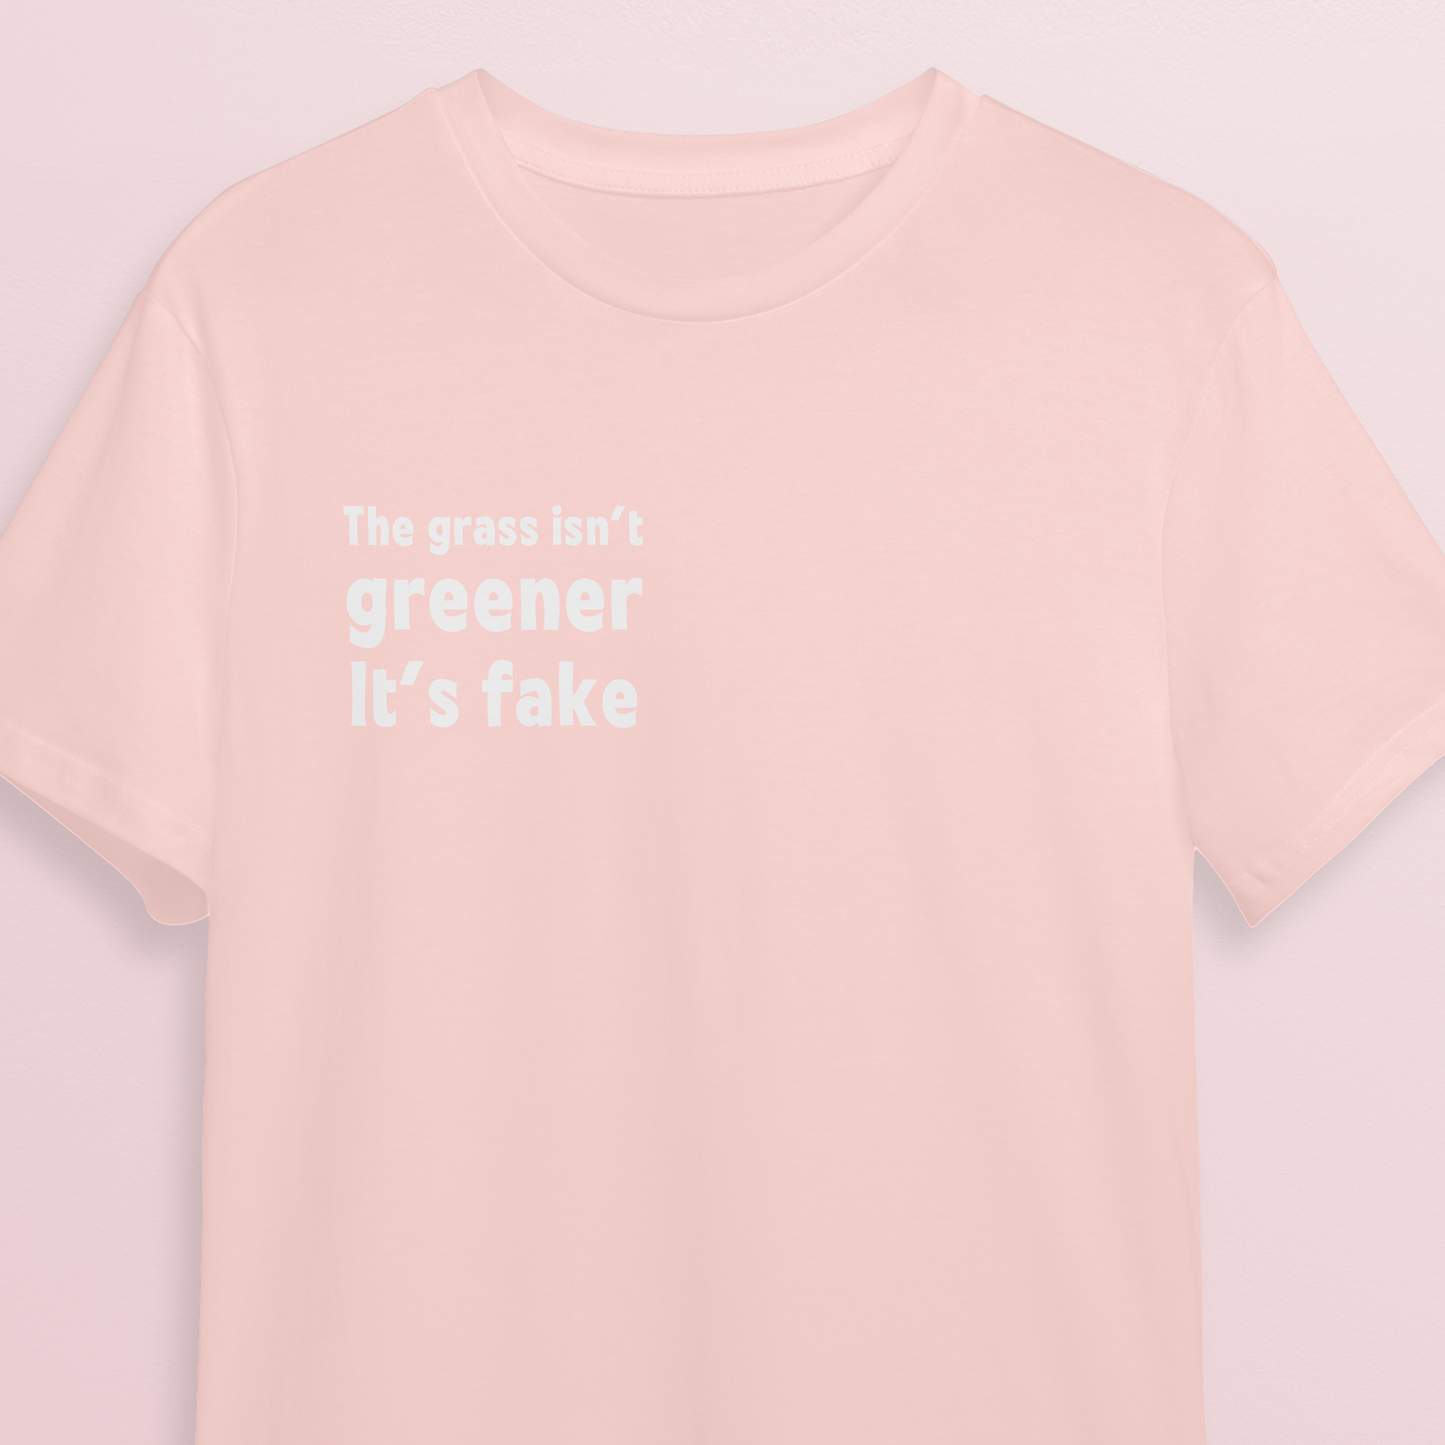 T-shirt - Fake grass - Soft rose